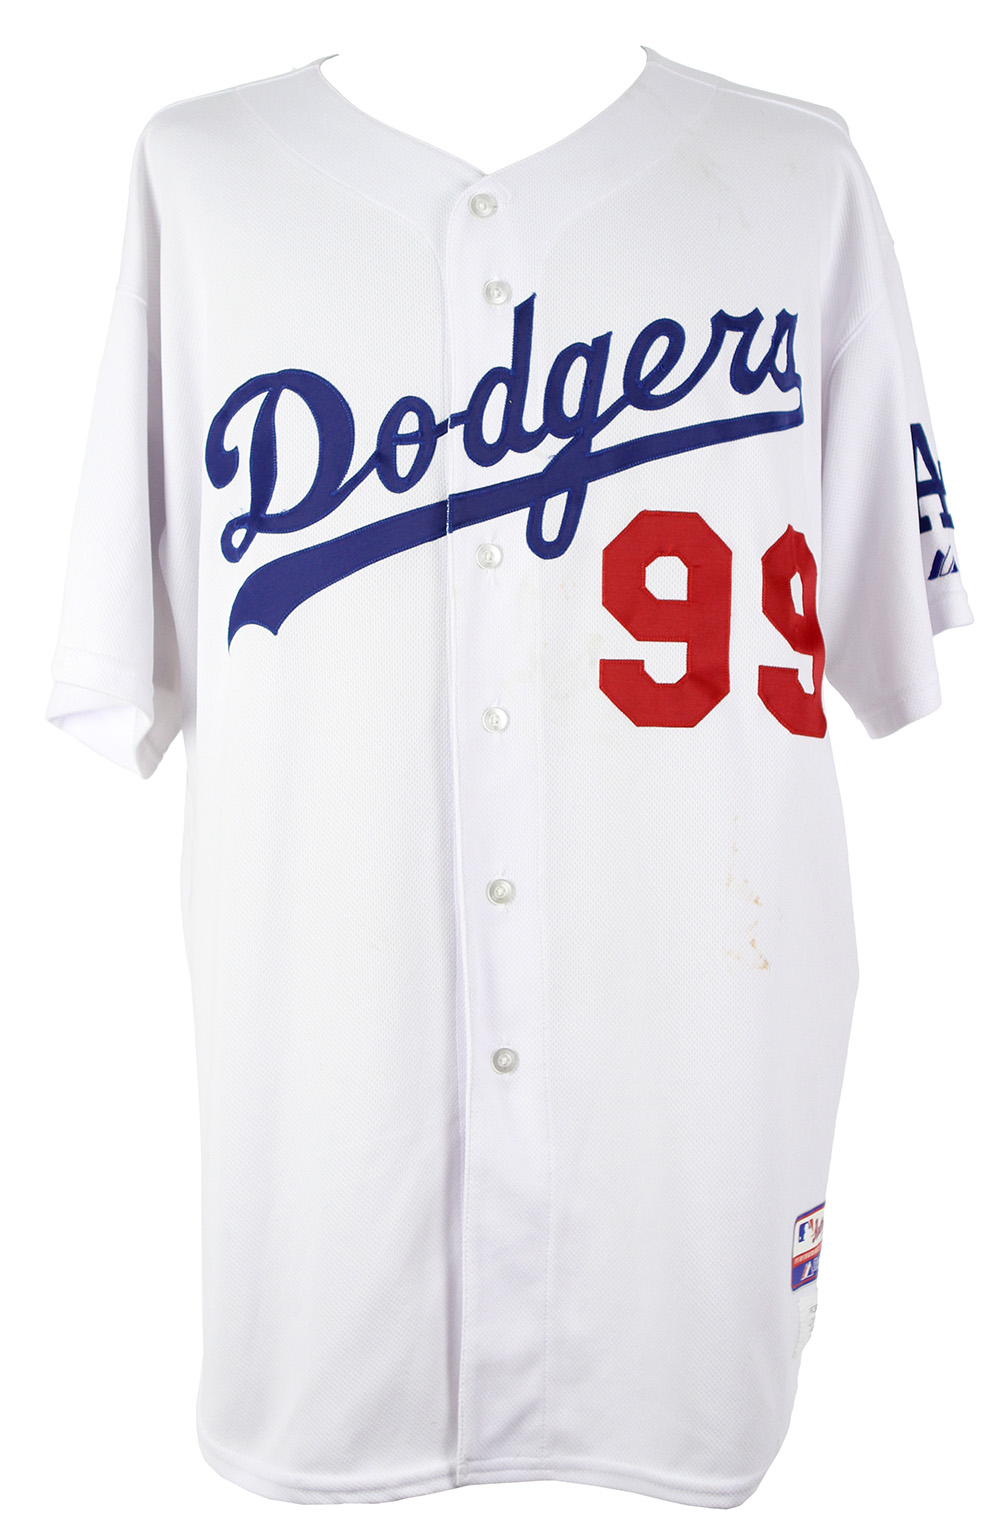 Los Angeles Dodgers #99 Hyun-Jin Ryu Manny Ramirez Jersey Cool Shirt  Stitched Authentic Commemorative Baseball Jerseys - AliExpress